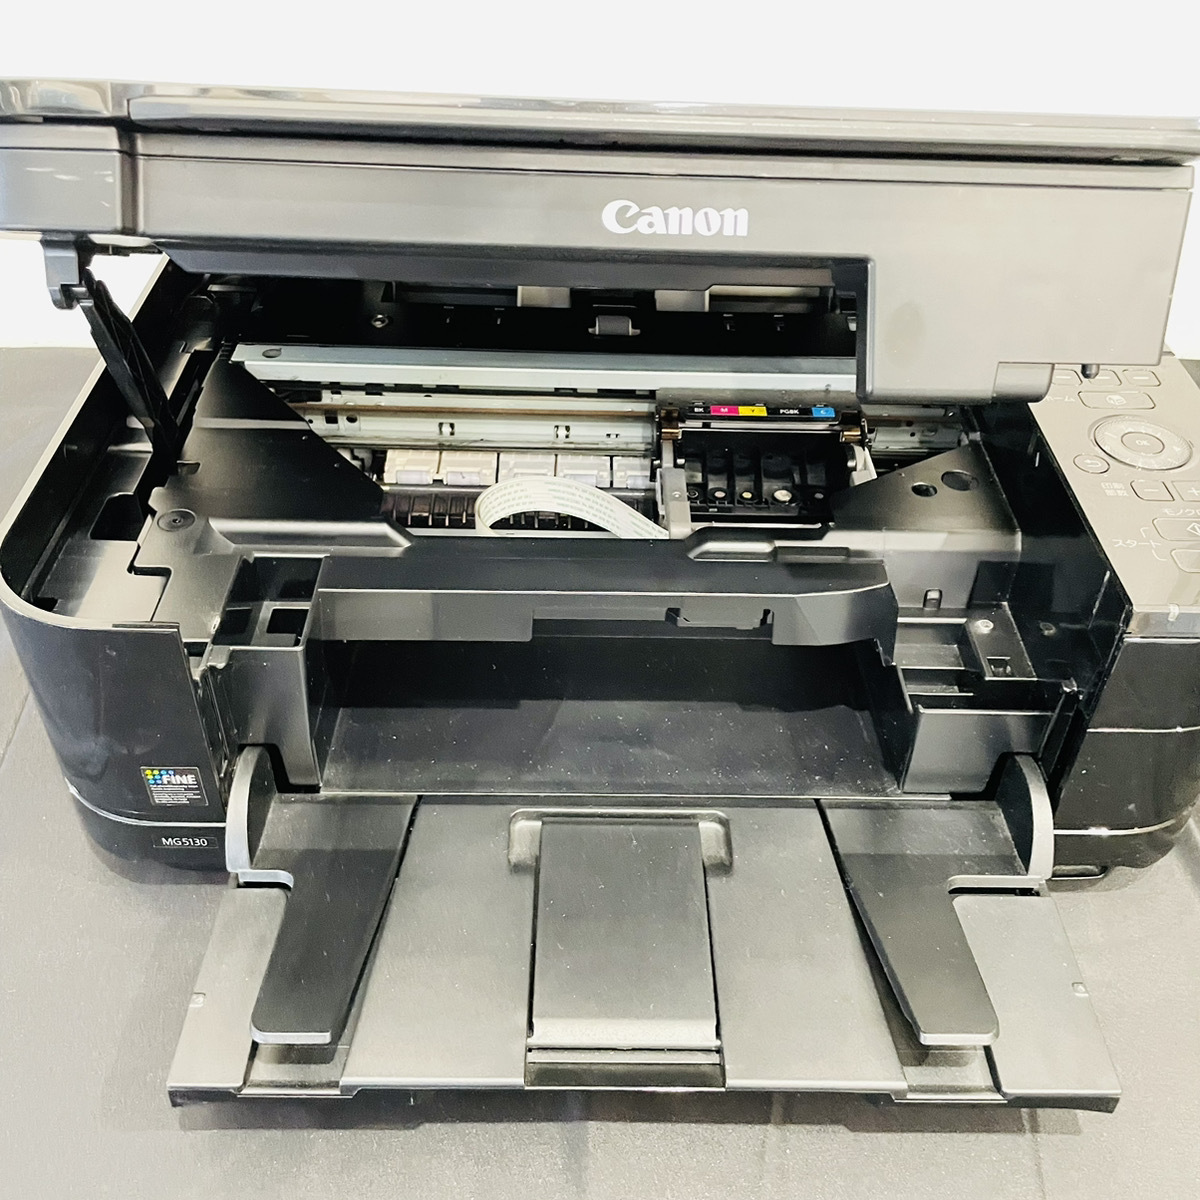 [A4155_1]CANON MG5130 ink-jet multifunction machine Canon Canon printer 